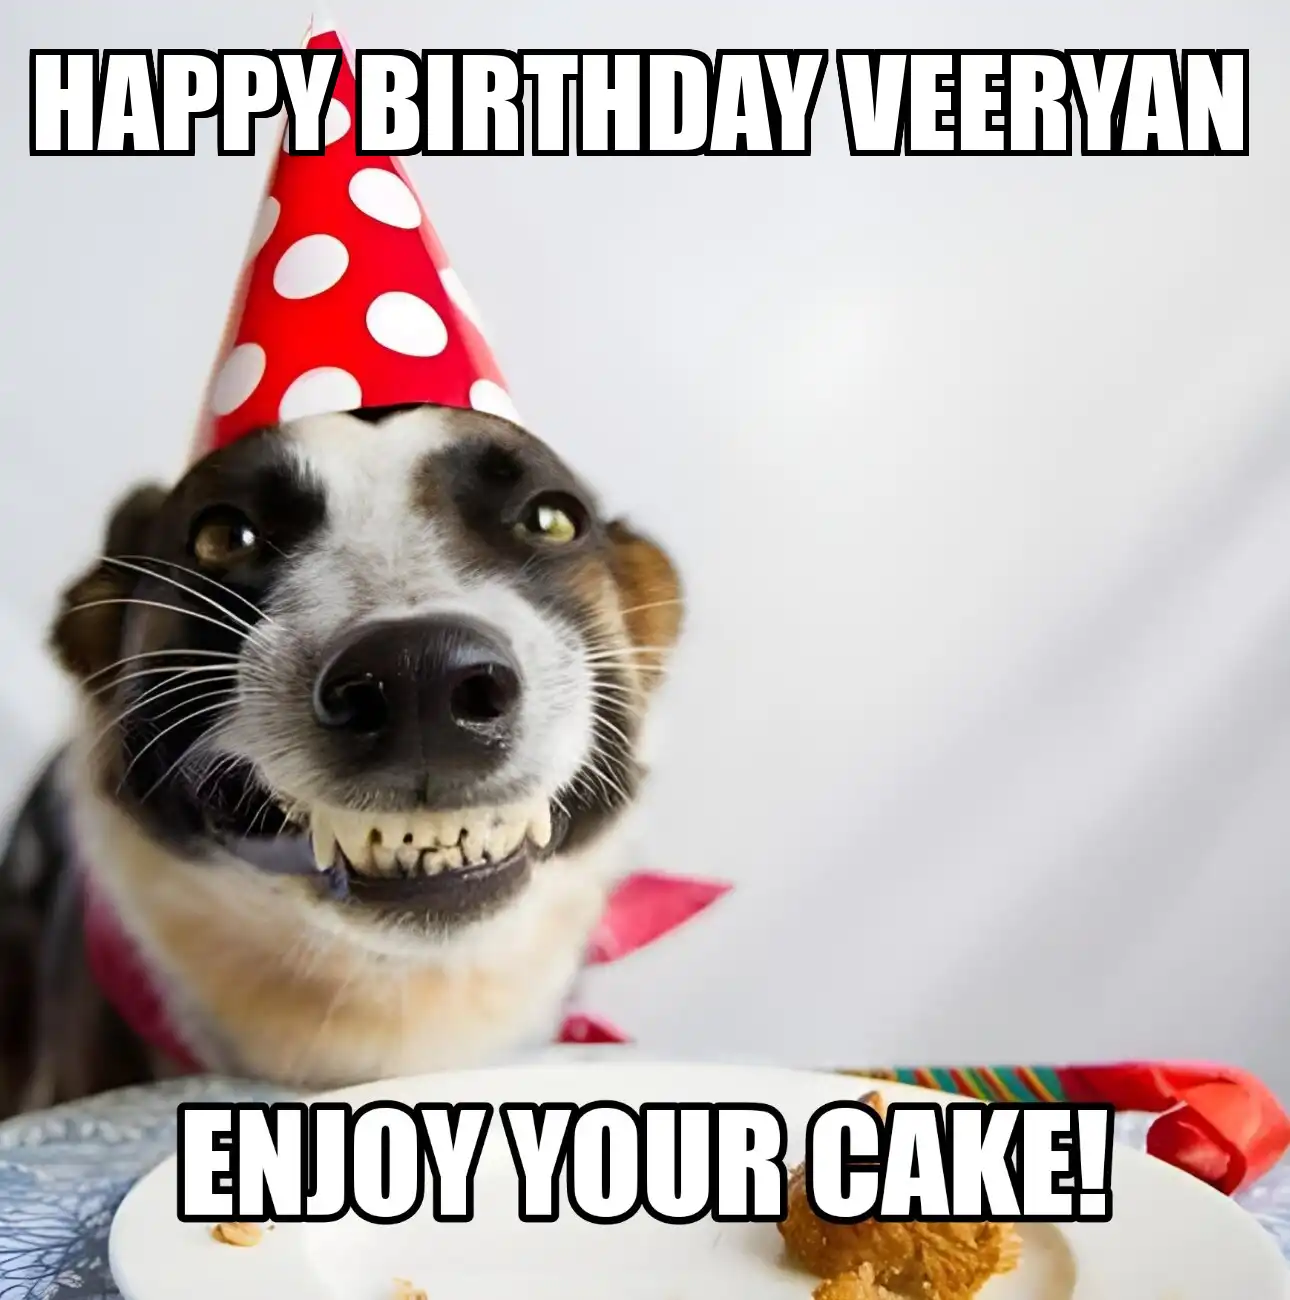 Happy Birthday Veeryan Enjoy Your Cake Dog Meme